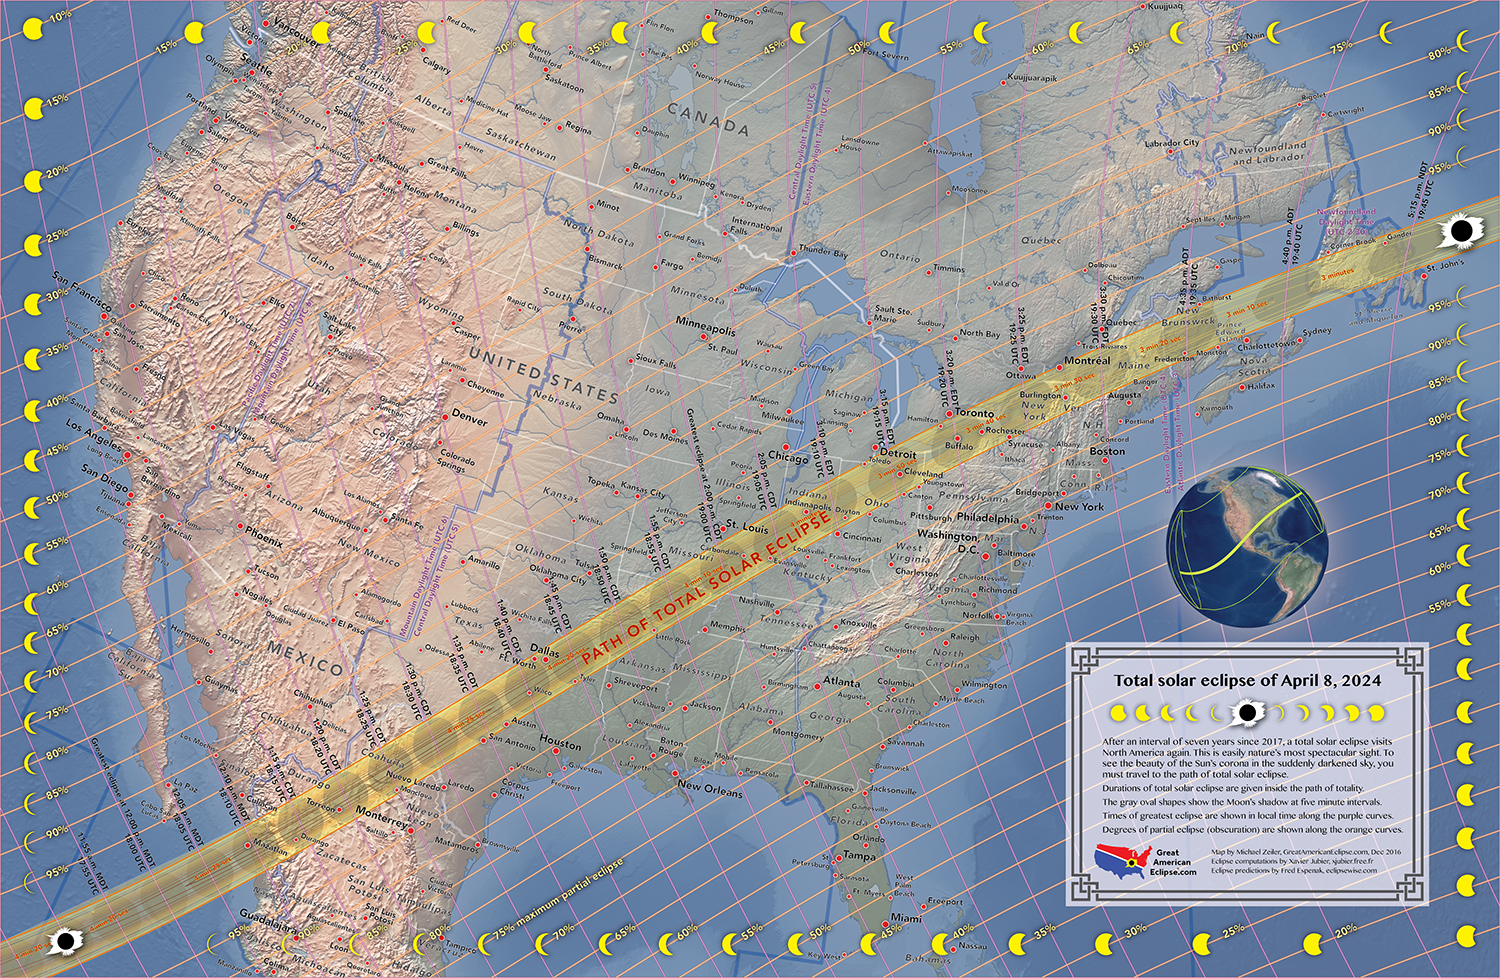 2020 Solar Eclipse Map Idaho 2024 Apr 8 — Total solar eclipse of April 8, 2024